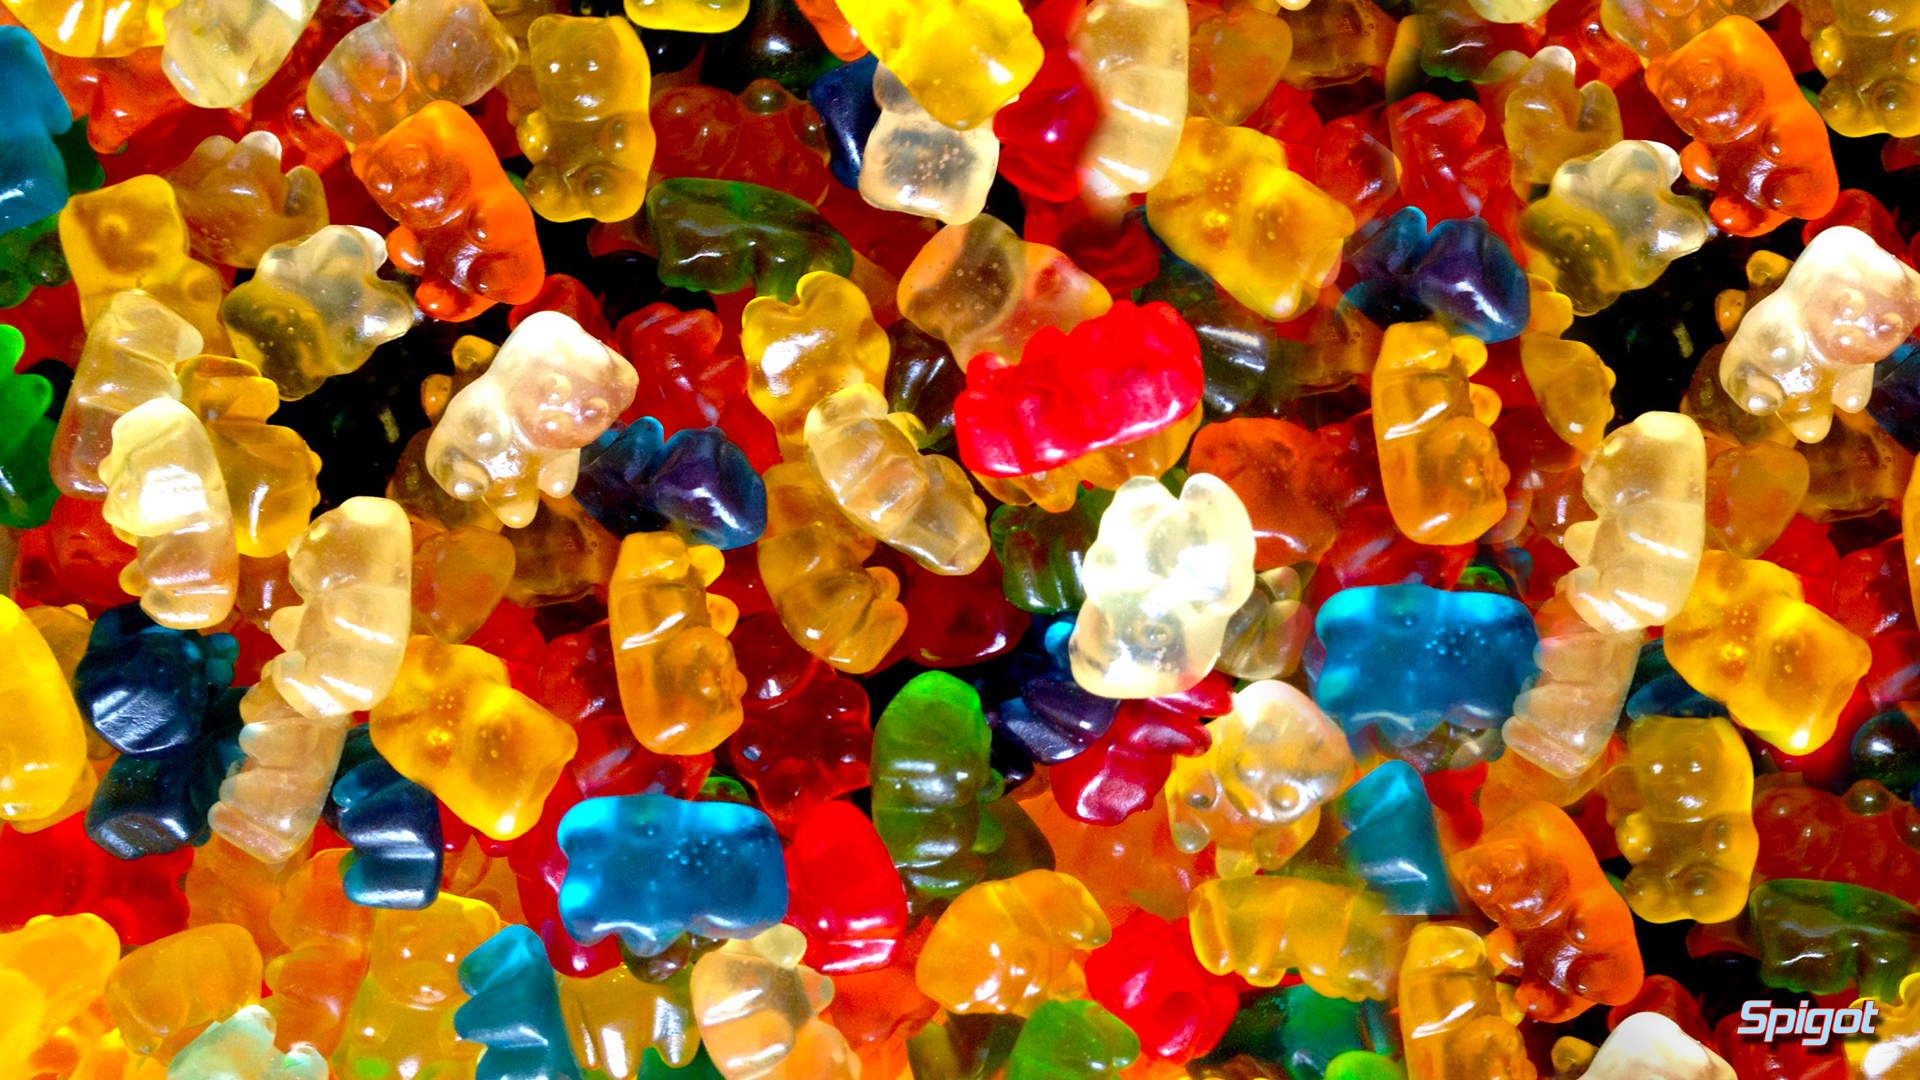 gummy-bears. “